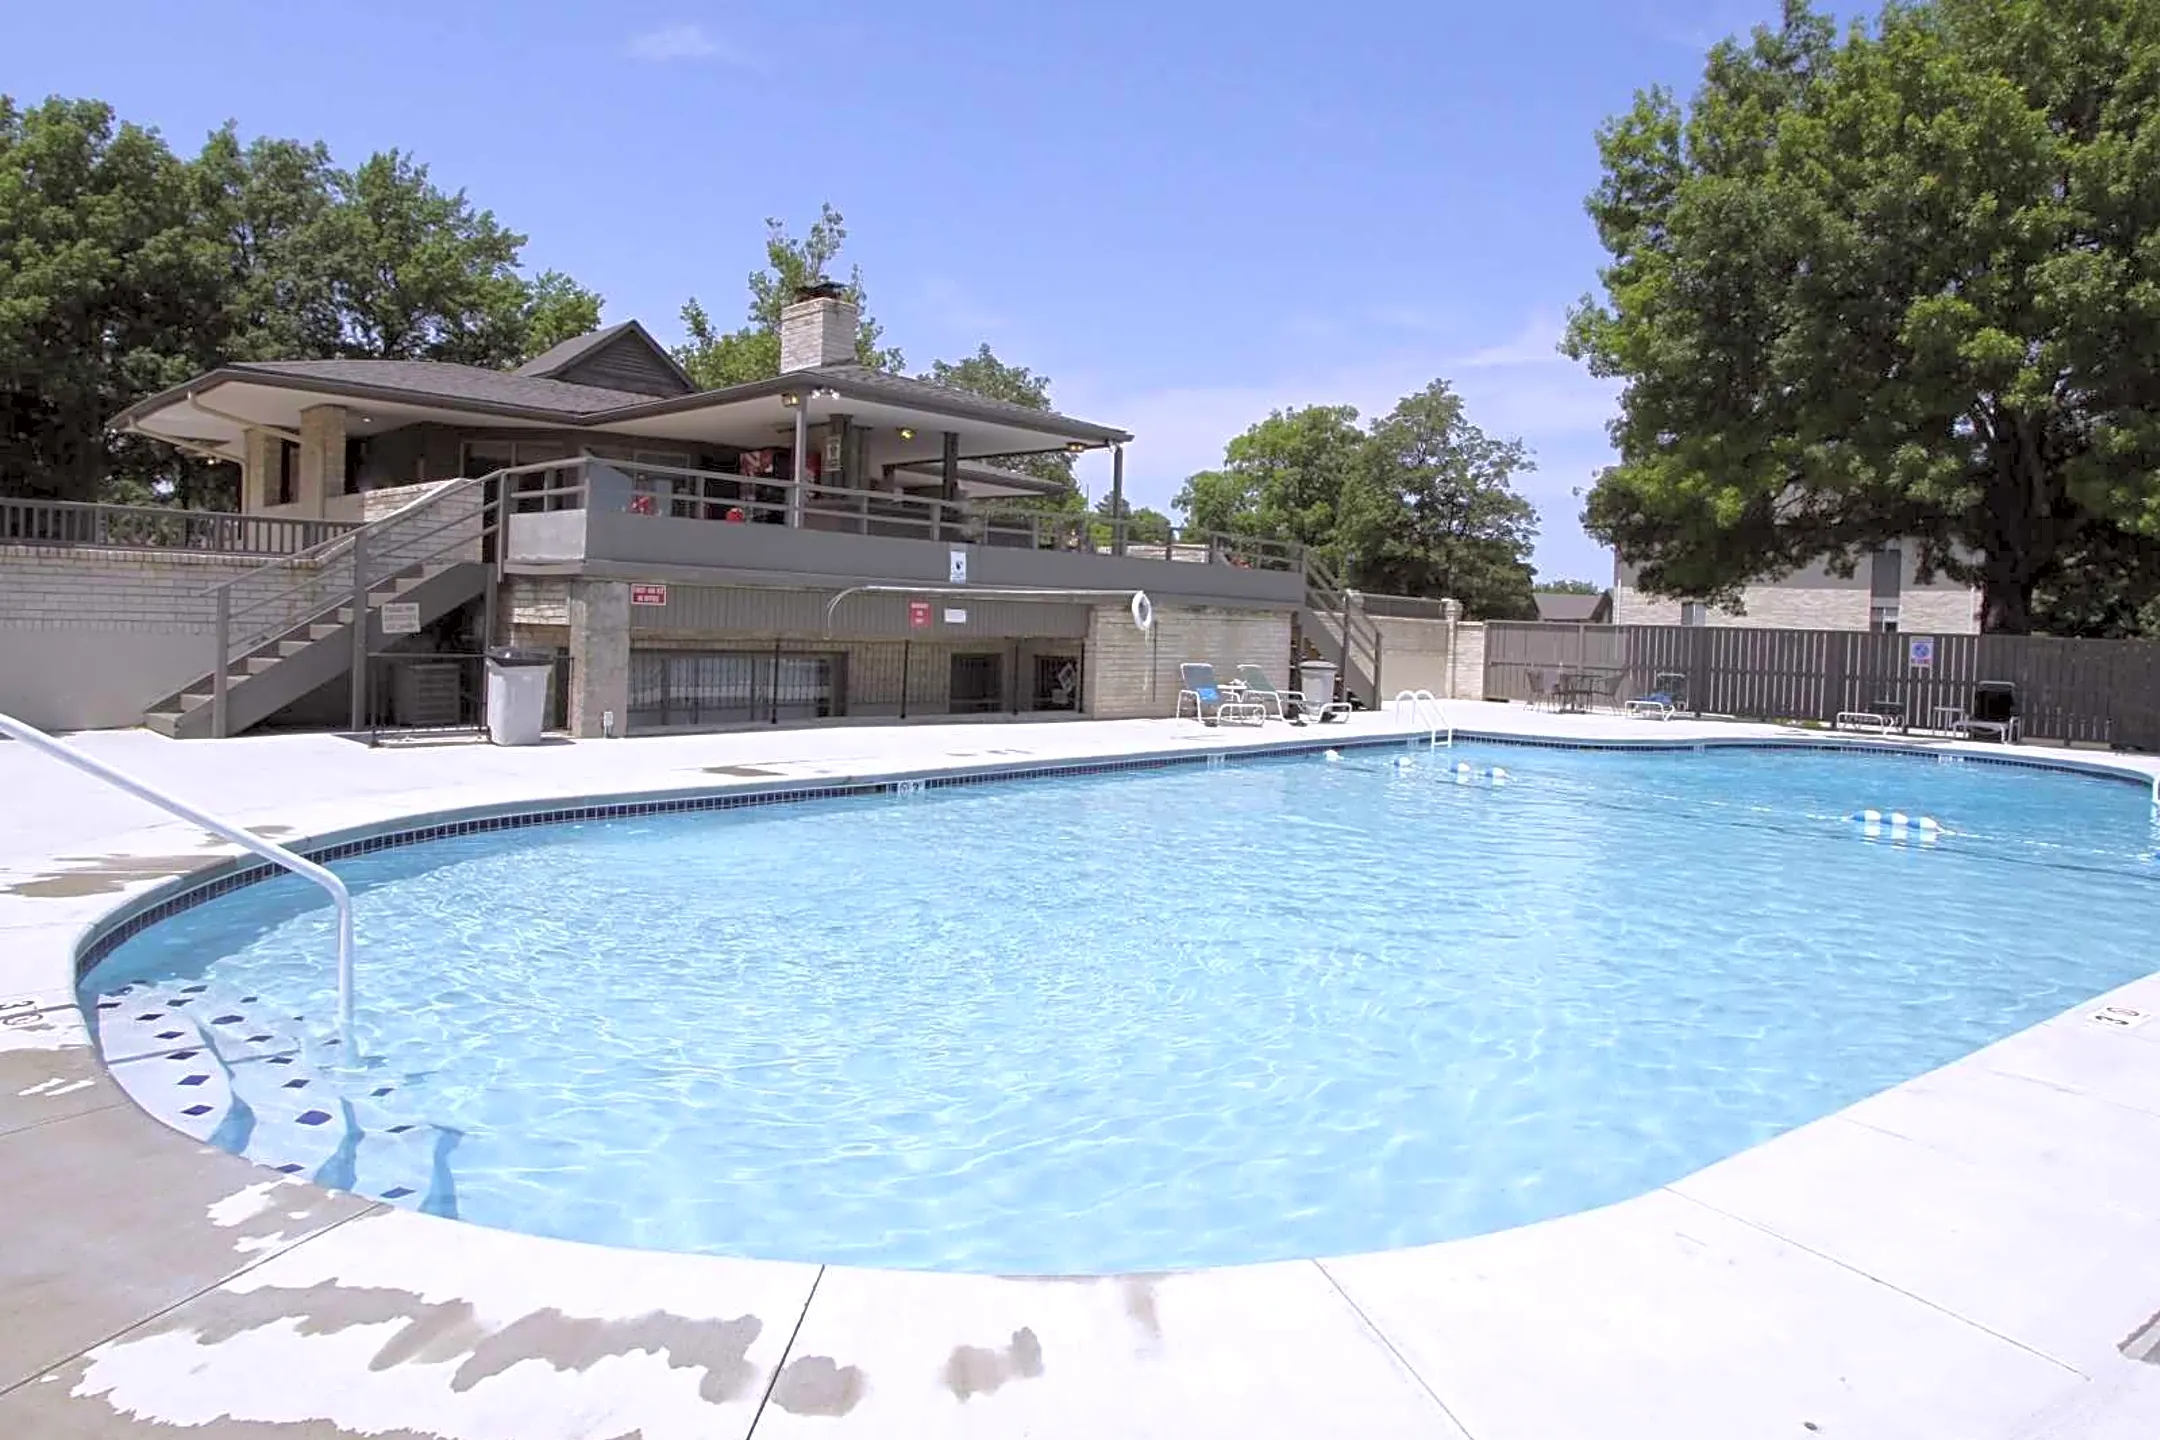 Pool - Briar Hill Apartments - Kansas City, MO